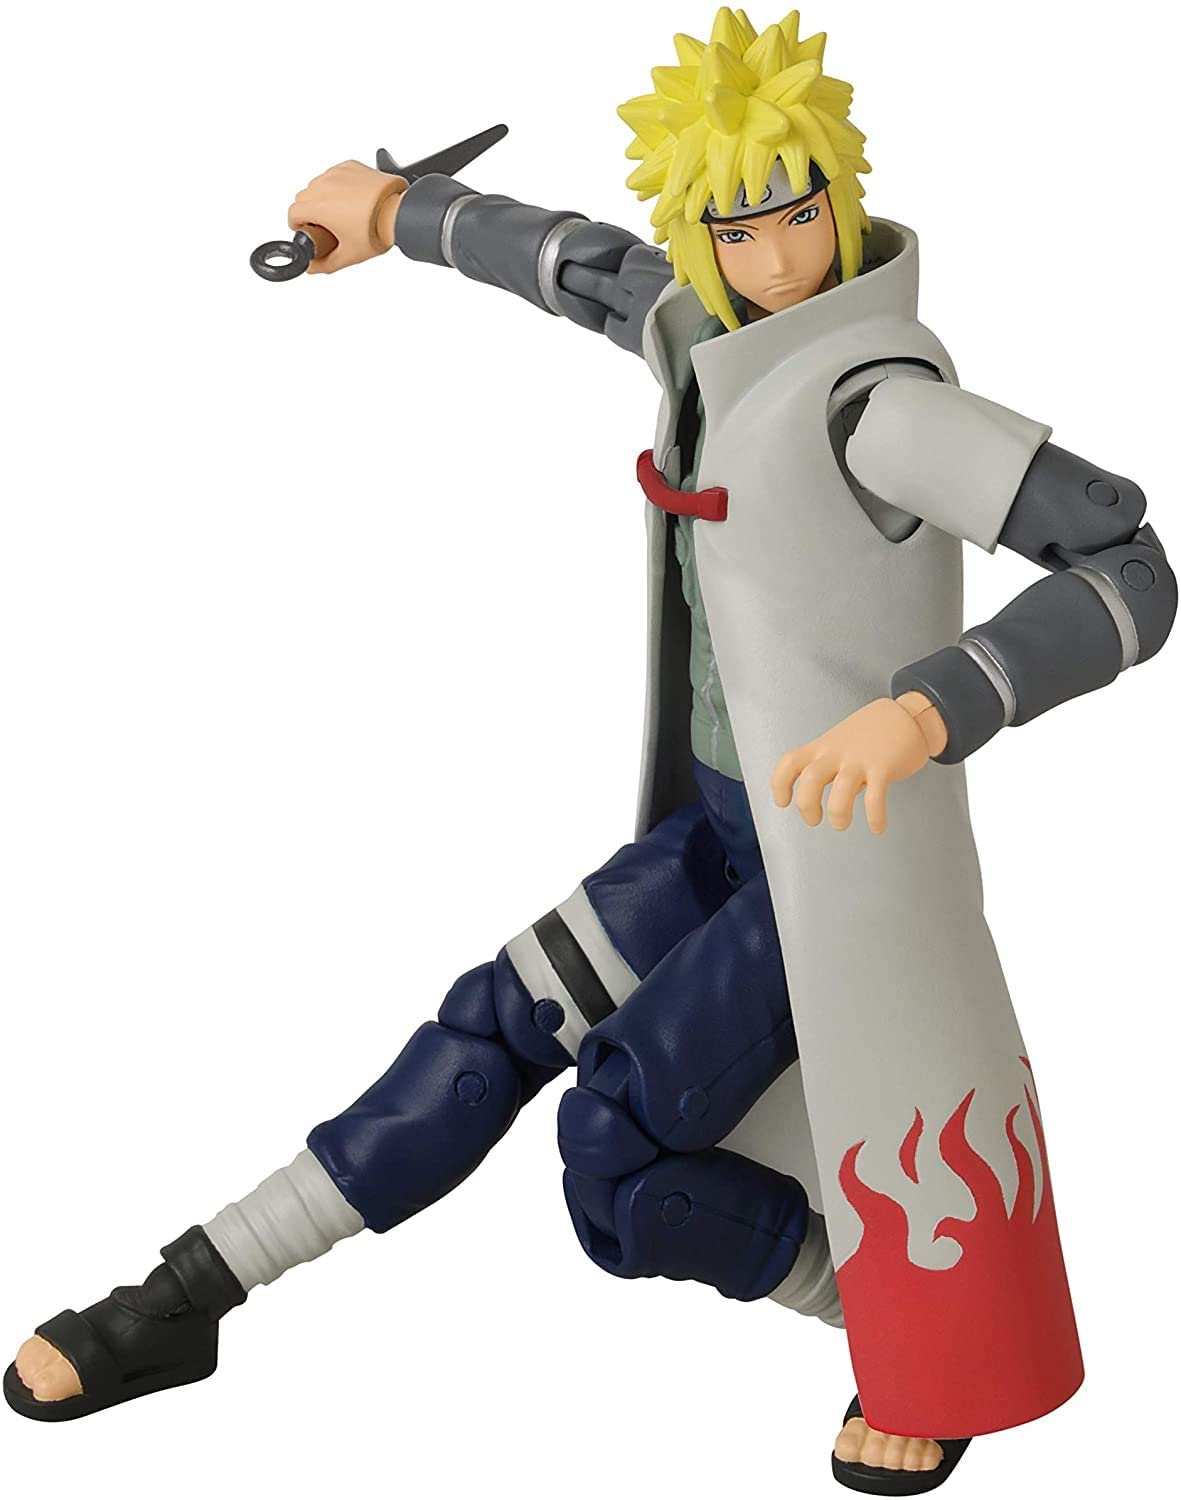 Naruto Shippuden 6 Inch Action Figure Anime Heroes - Sasuke Uchiha Rin